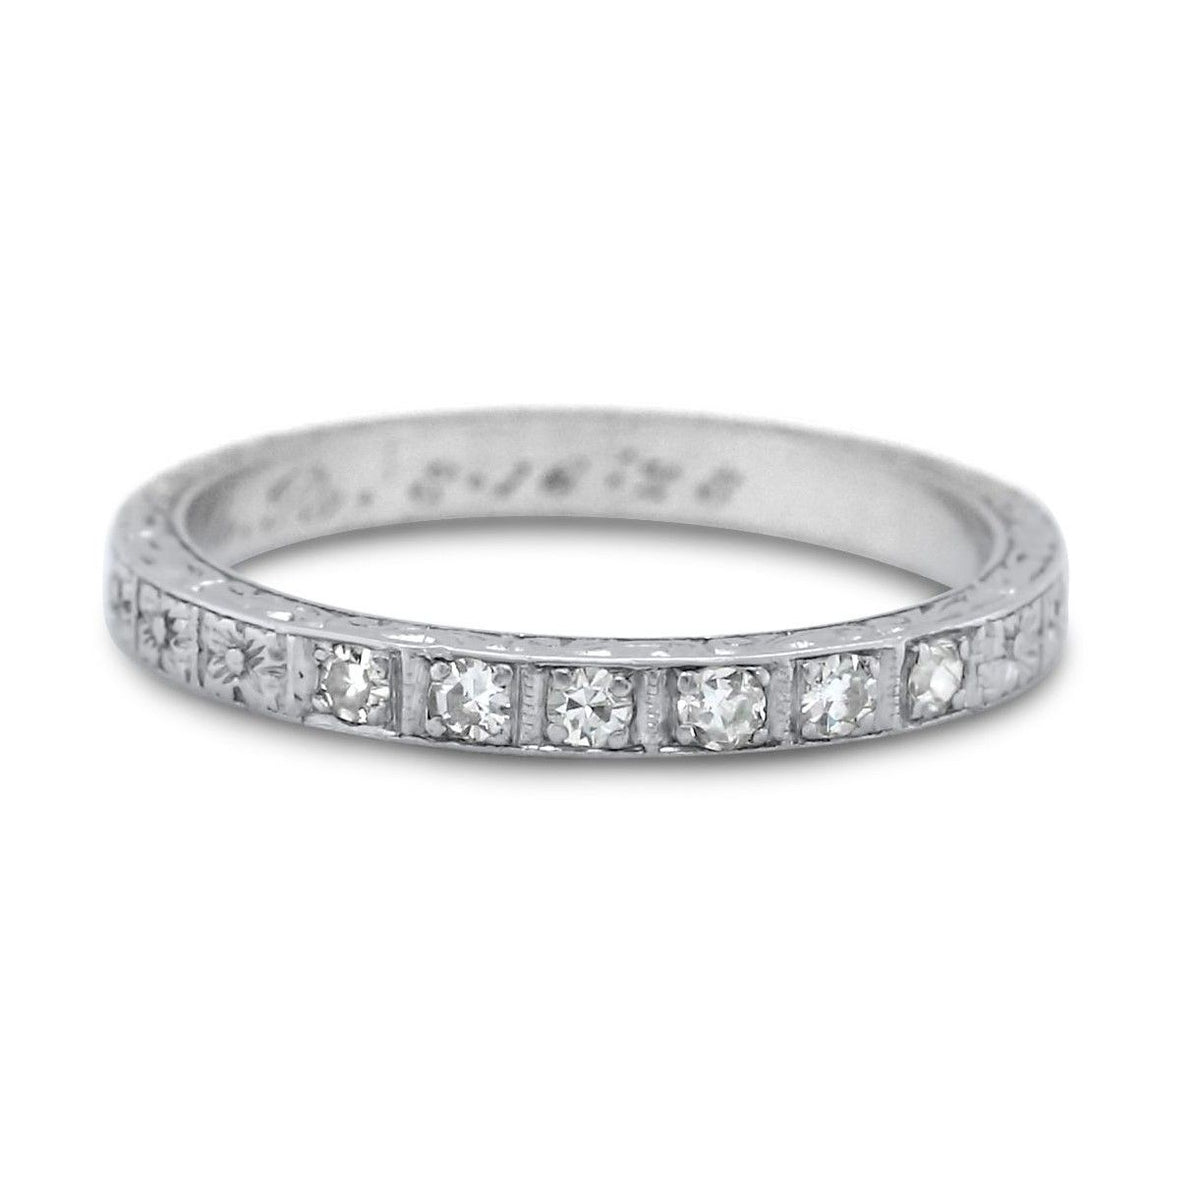 Platinum bezel set diamond and flower engraved patter antique eternity wedding band